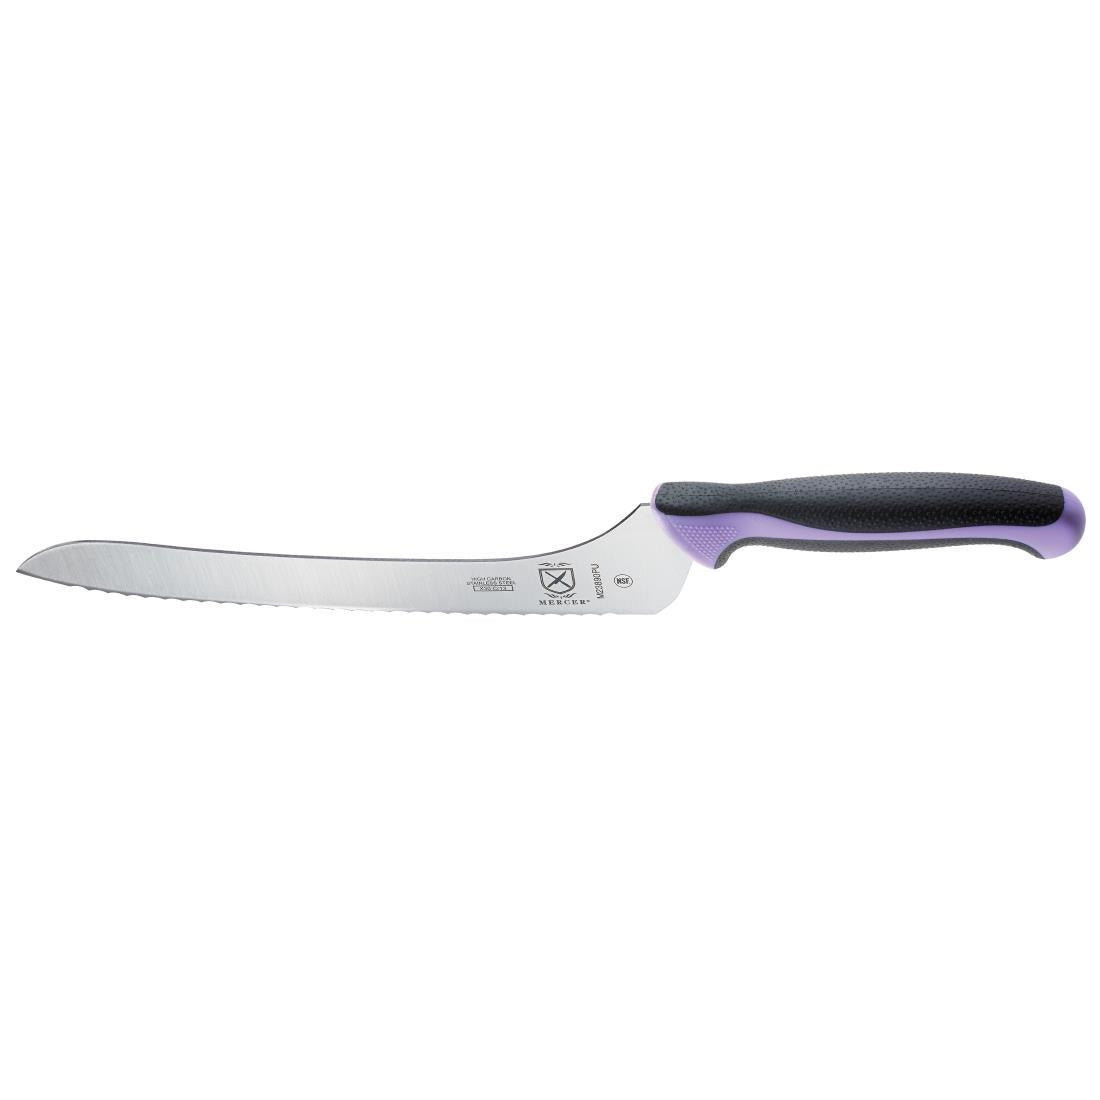 FB503 Mercer Millennia Culinary Allergen Safety Offset Serrated Bread Knife 23cm JD Catering Equipment Solutions Ltd